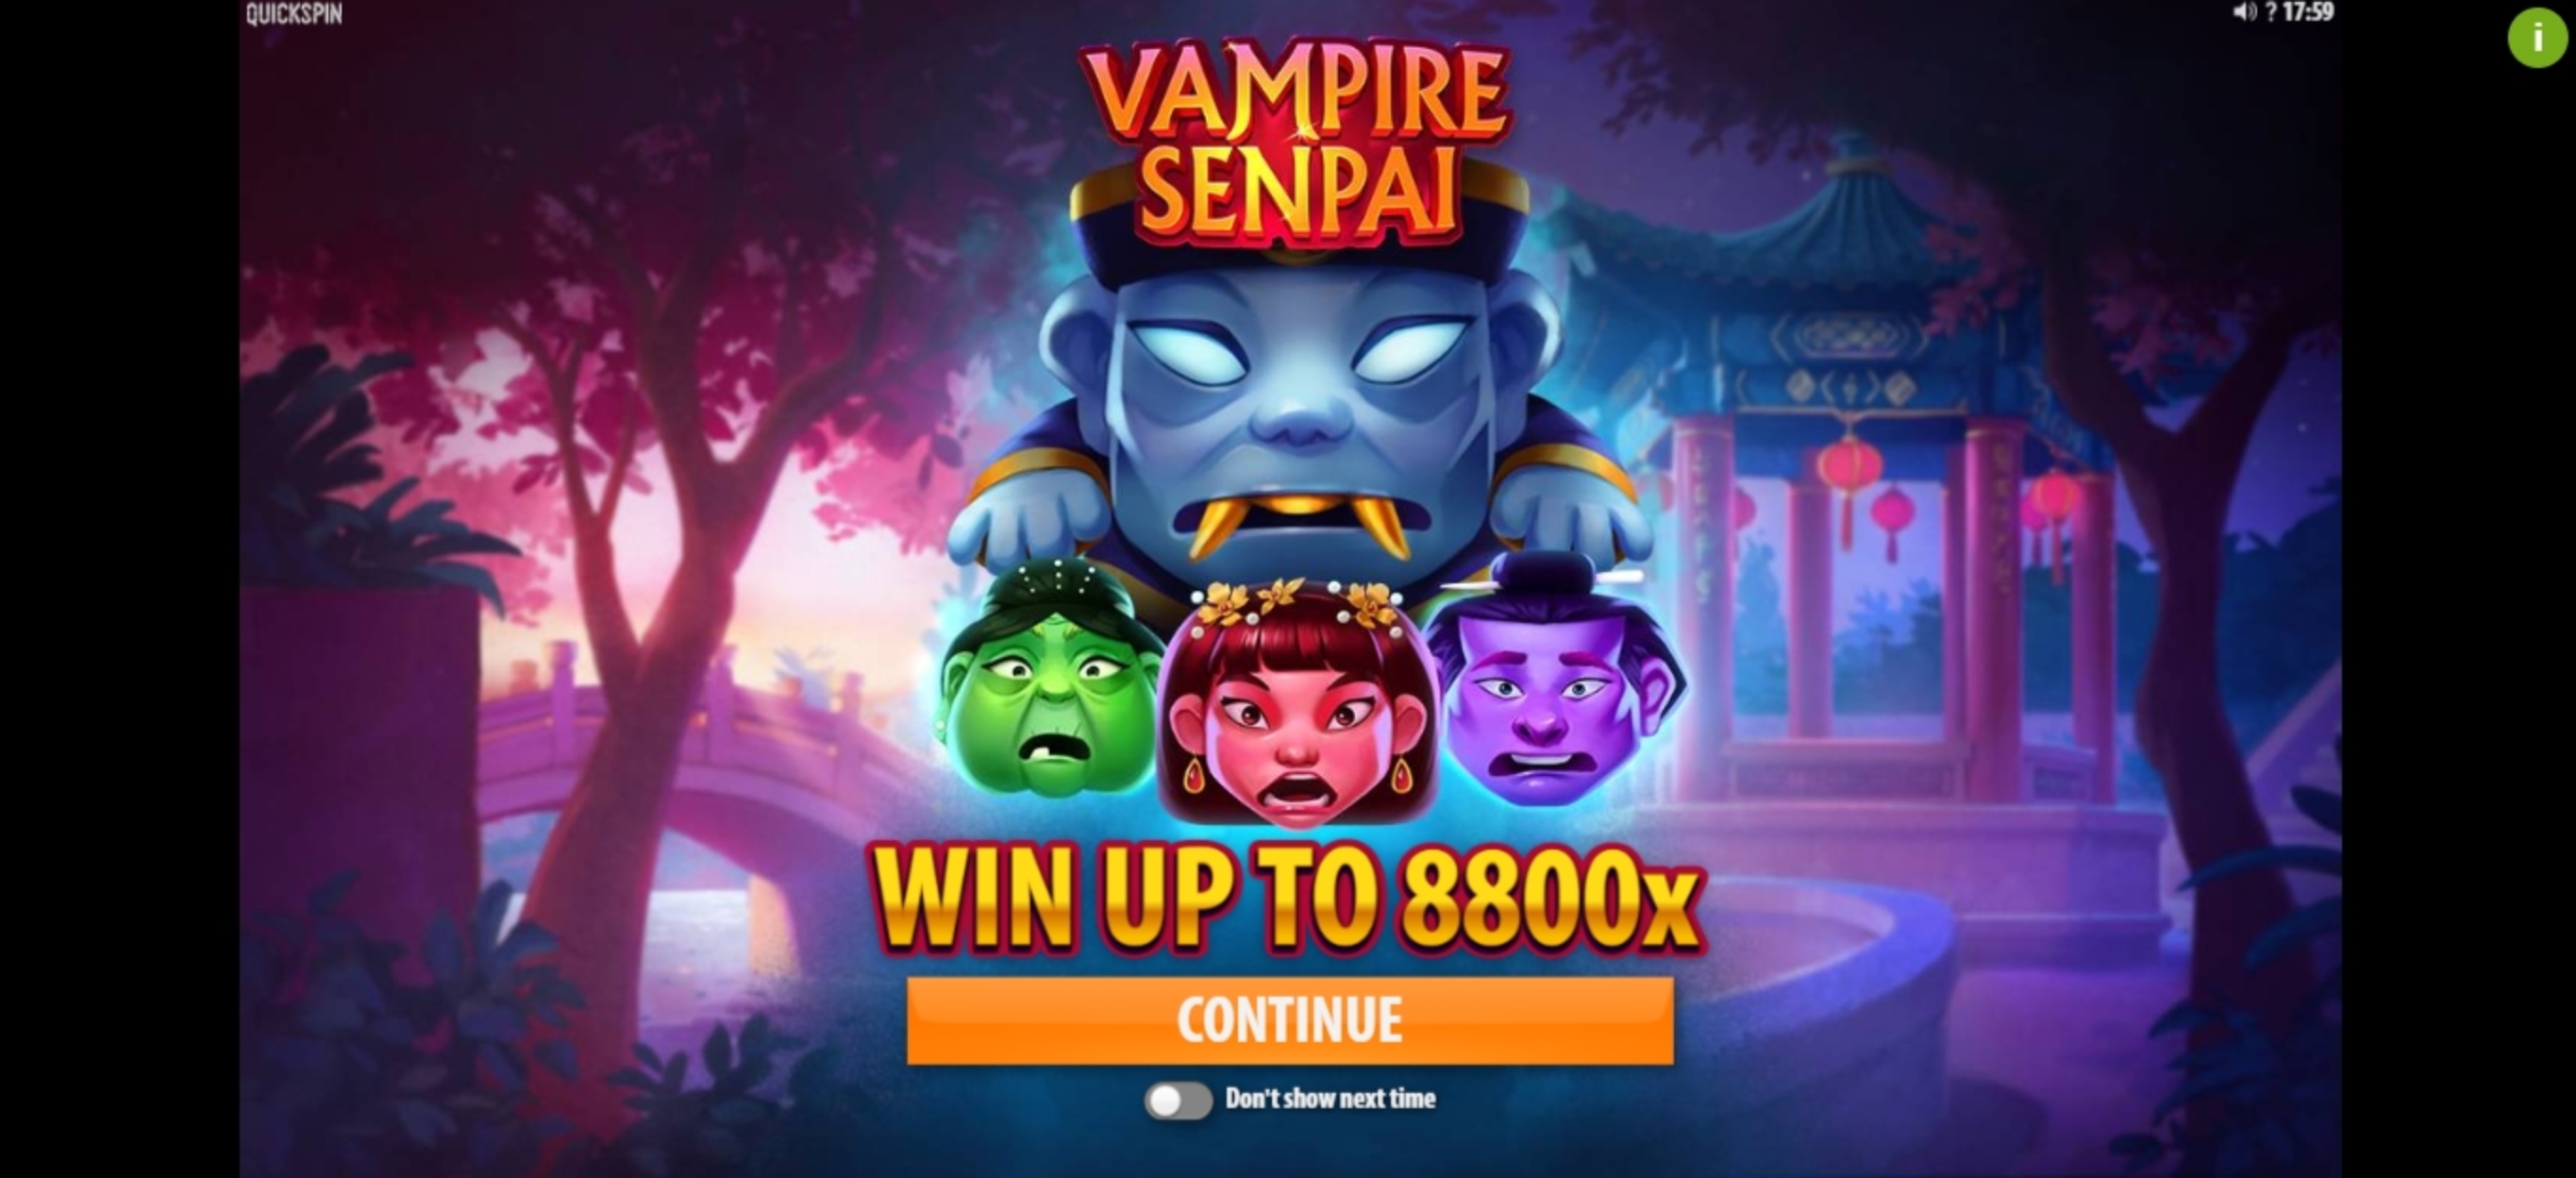 Play Vampire Senpai Free Casino Slot Game by Quickspin